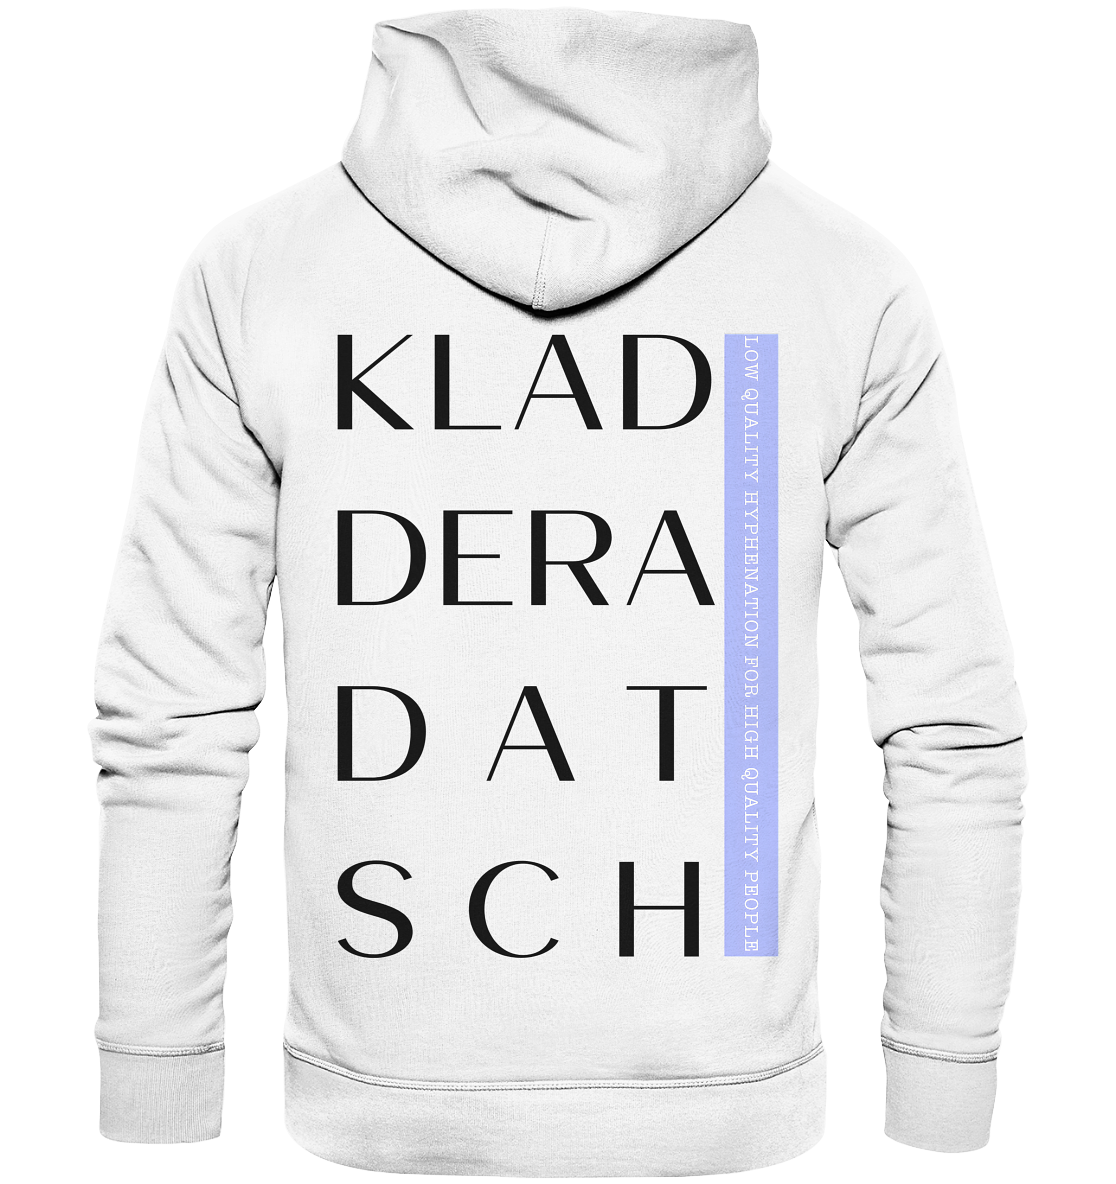 KLADDERADATSCH (LQHFHQP) - Organic Fashion Hoodie